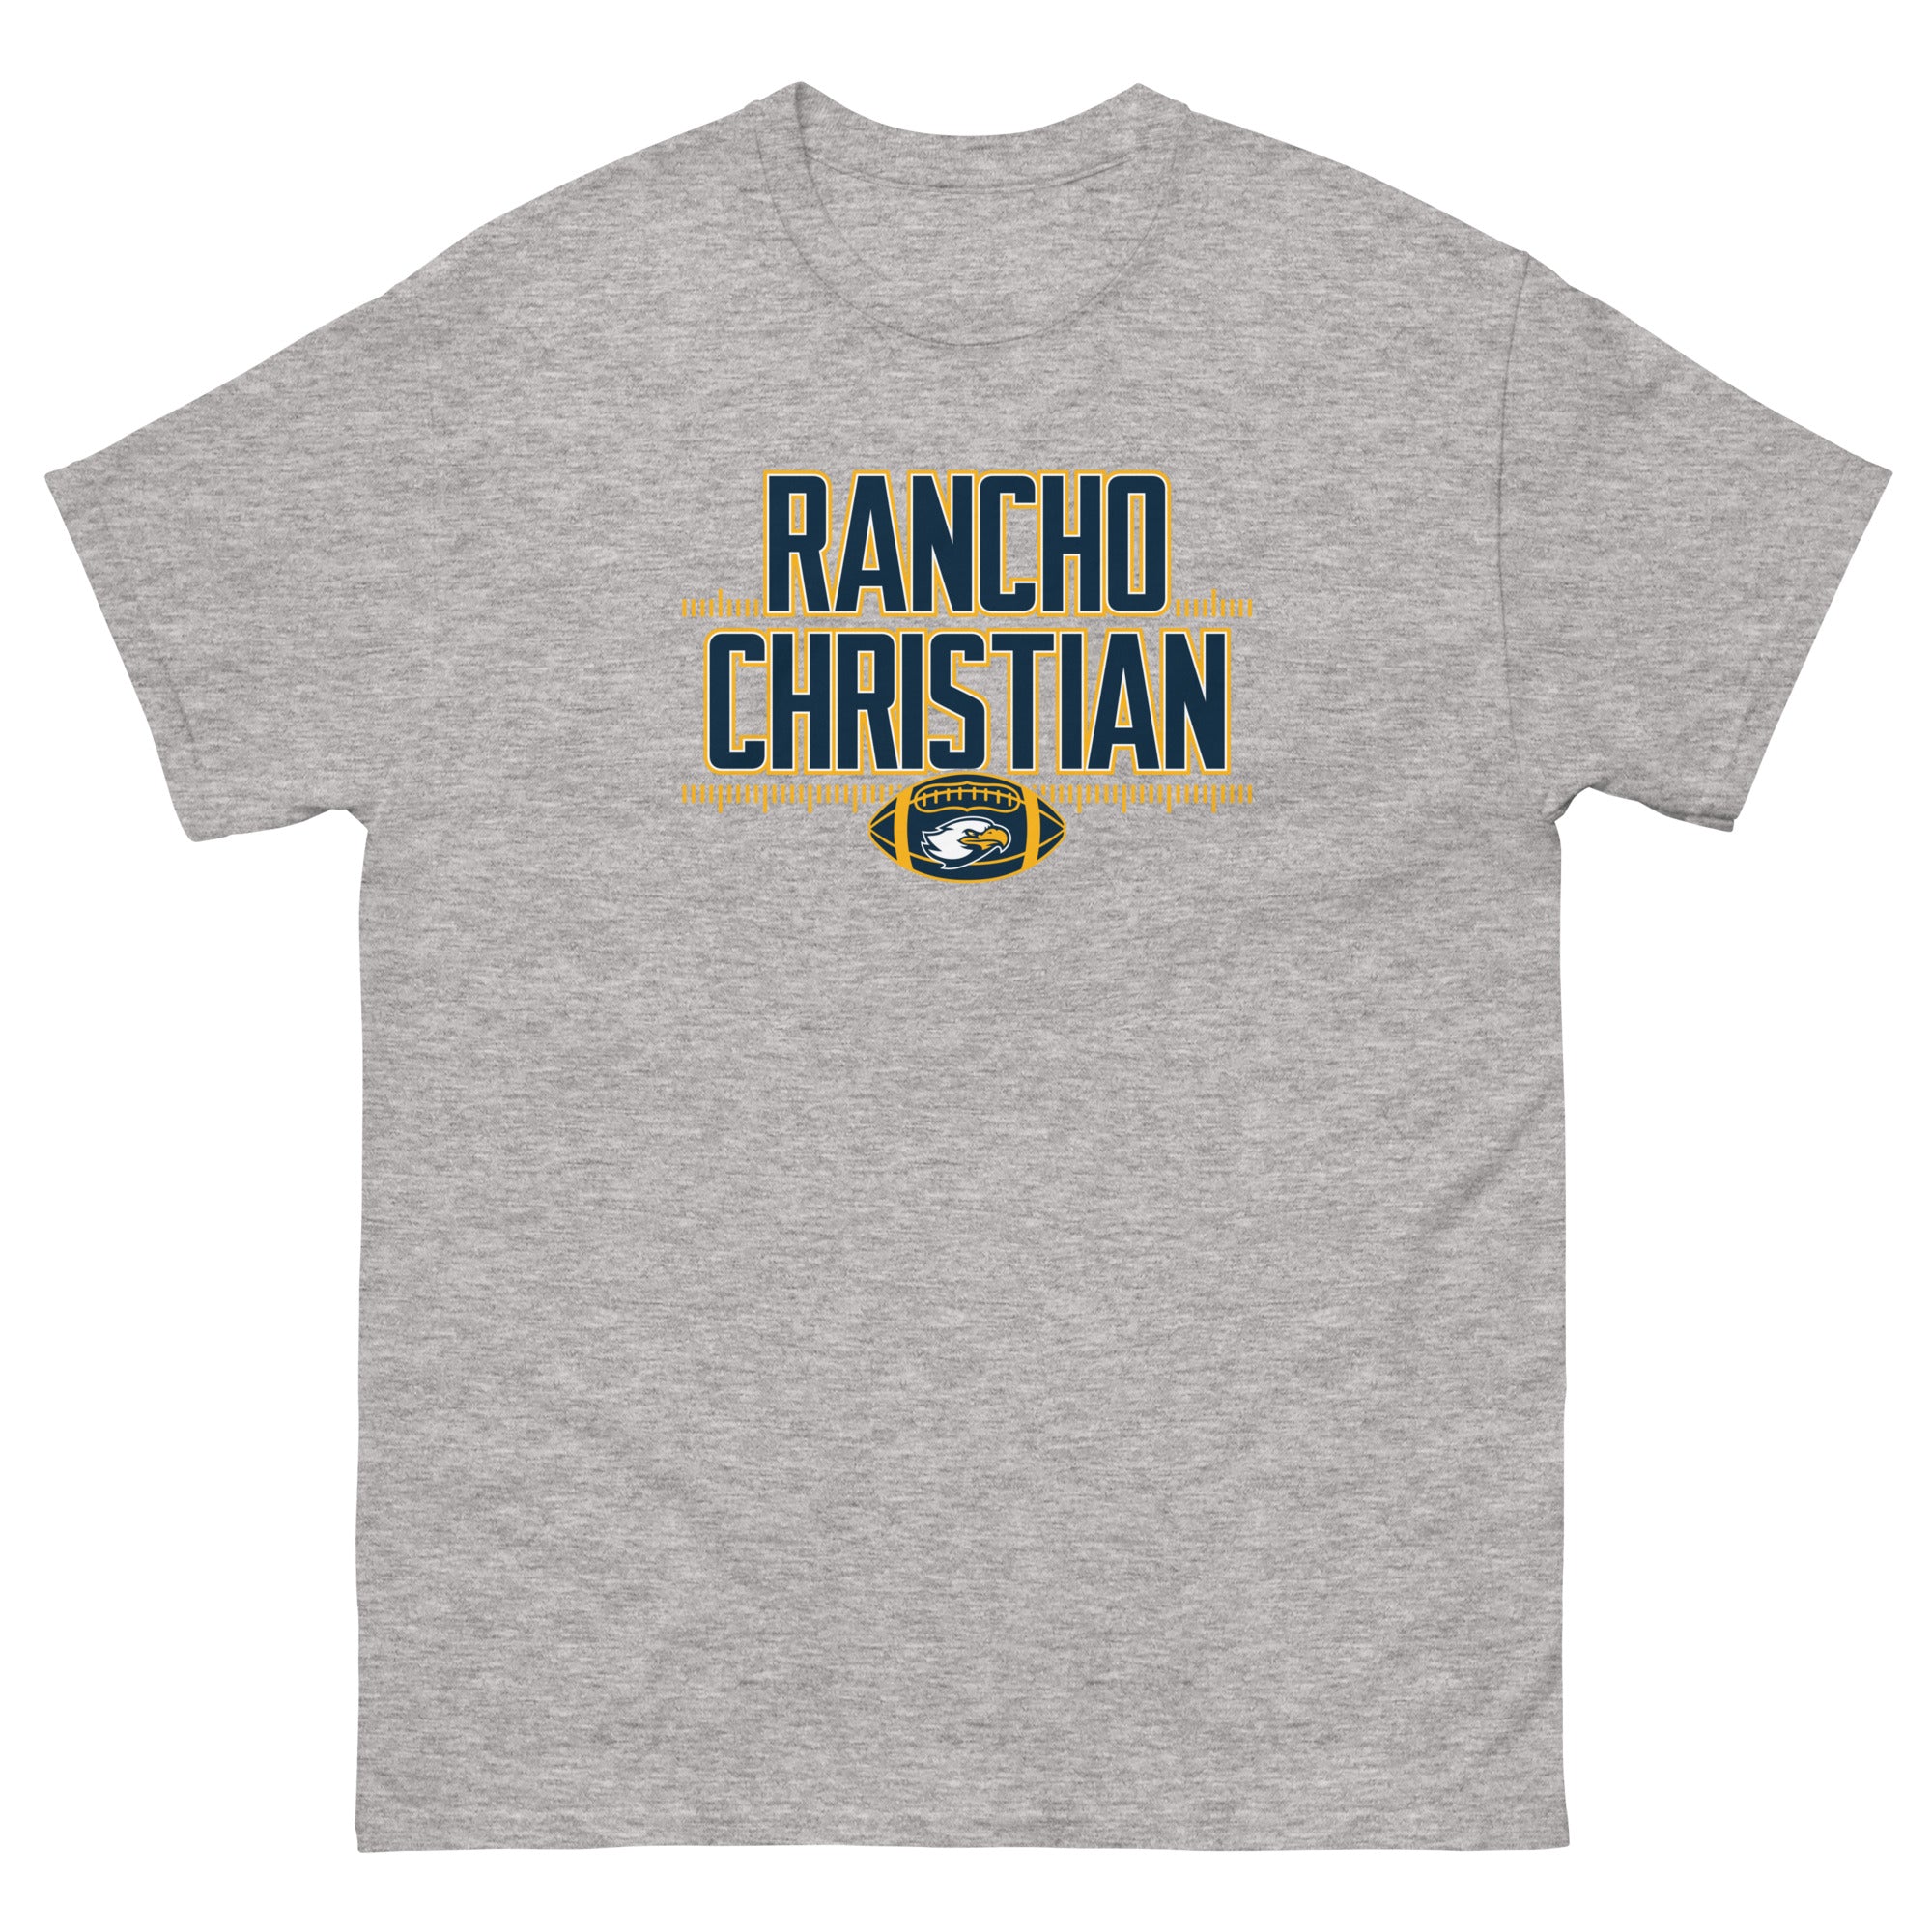 Rancho Christian Mens Classic Tee